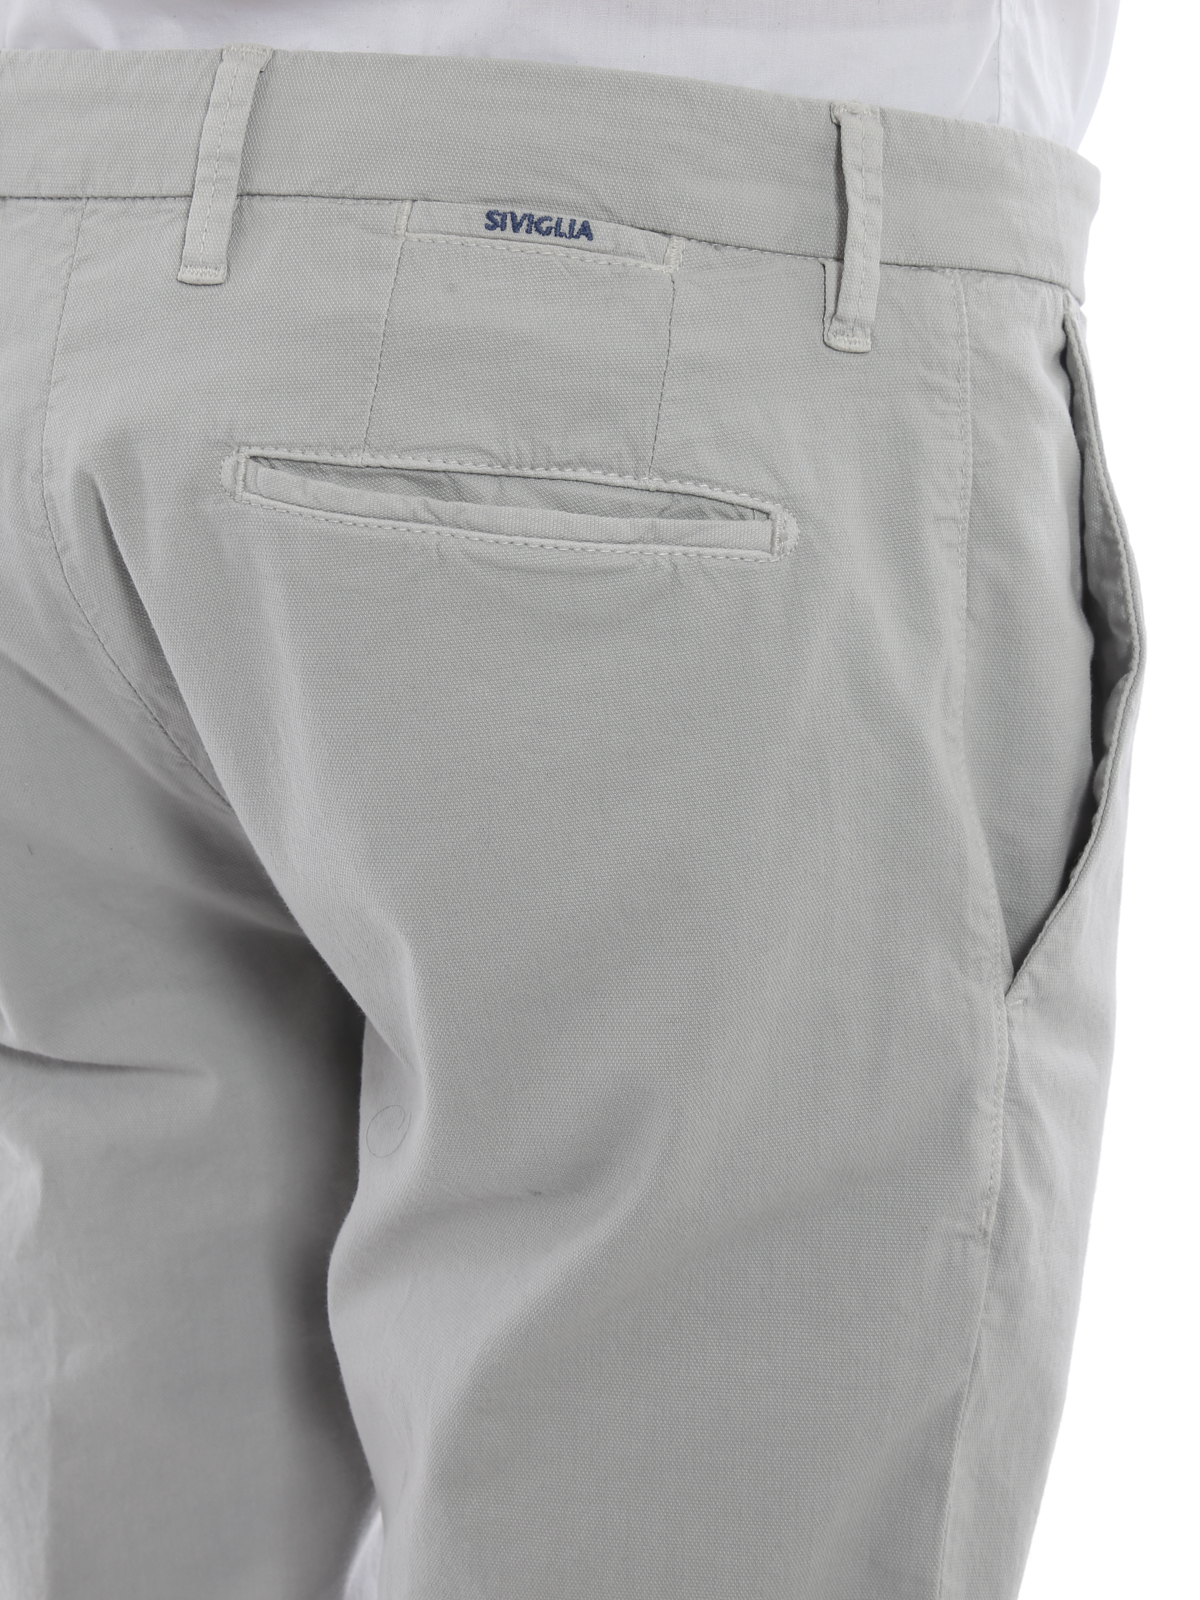 Toestemming Verpletteren Beneden afronden Casual trousers Siviglia Denim - Clou cotton trousers - B2E6S0148659